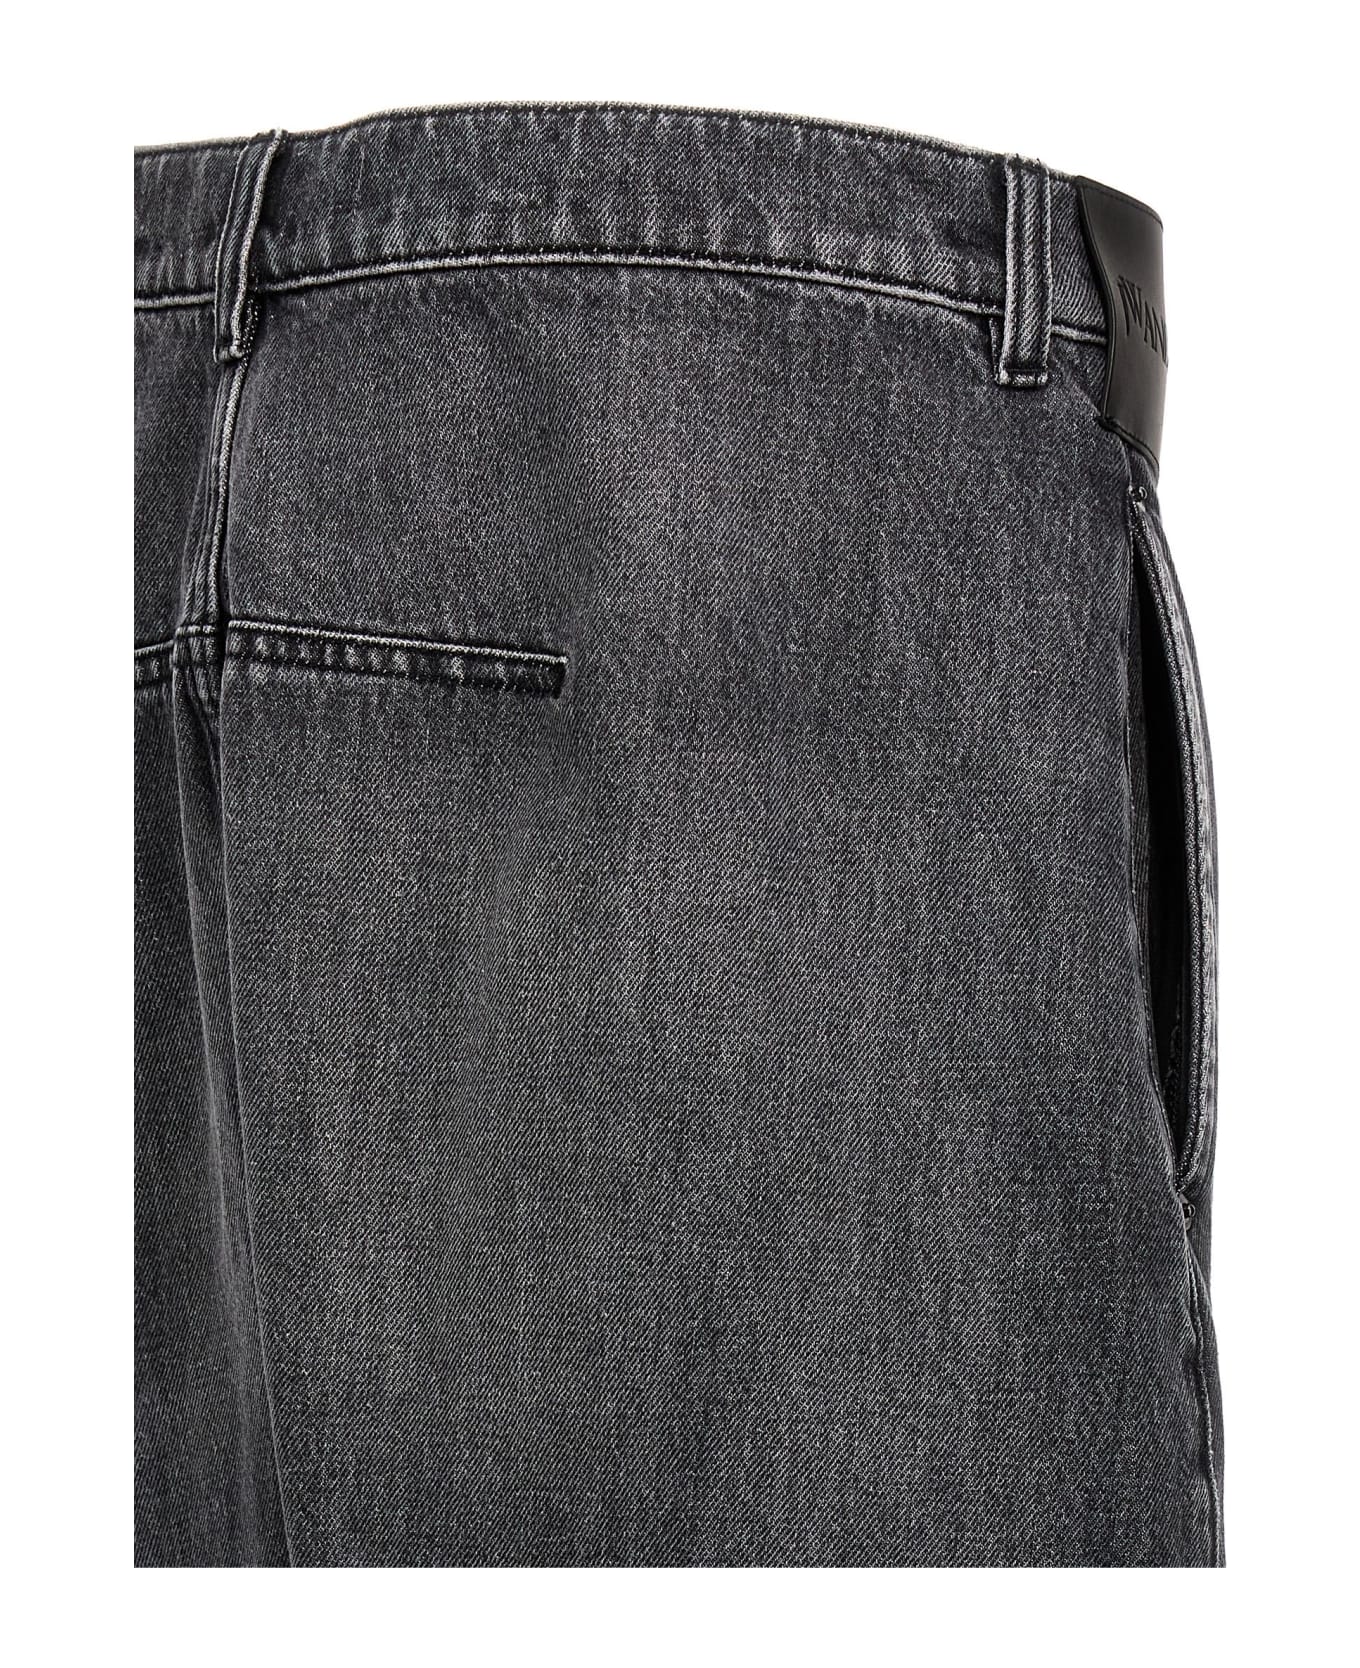 J.W. Anderson 'twisted Workwear' Jeans - Grey